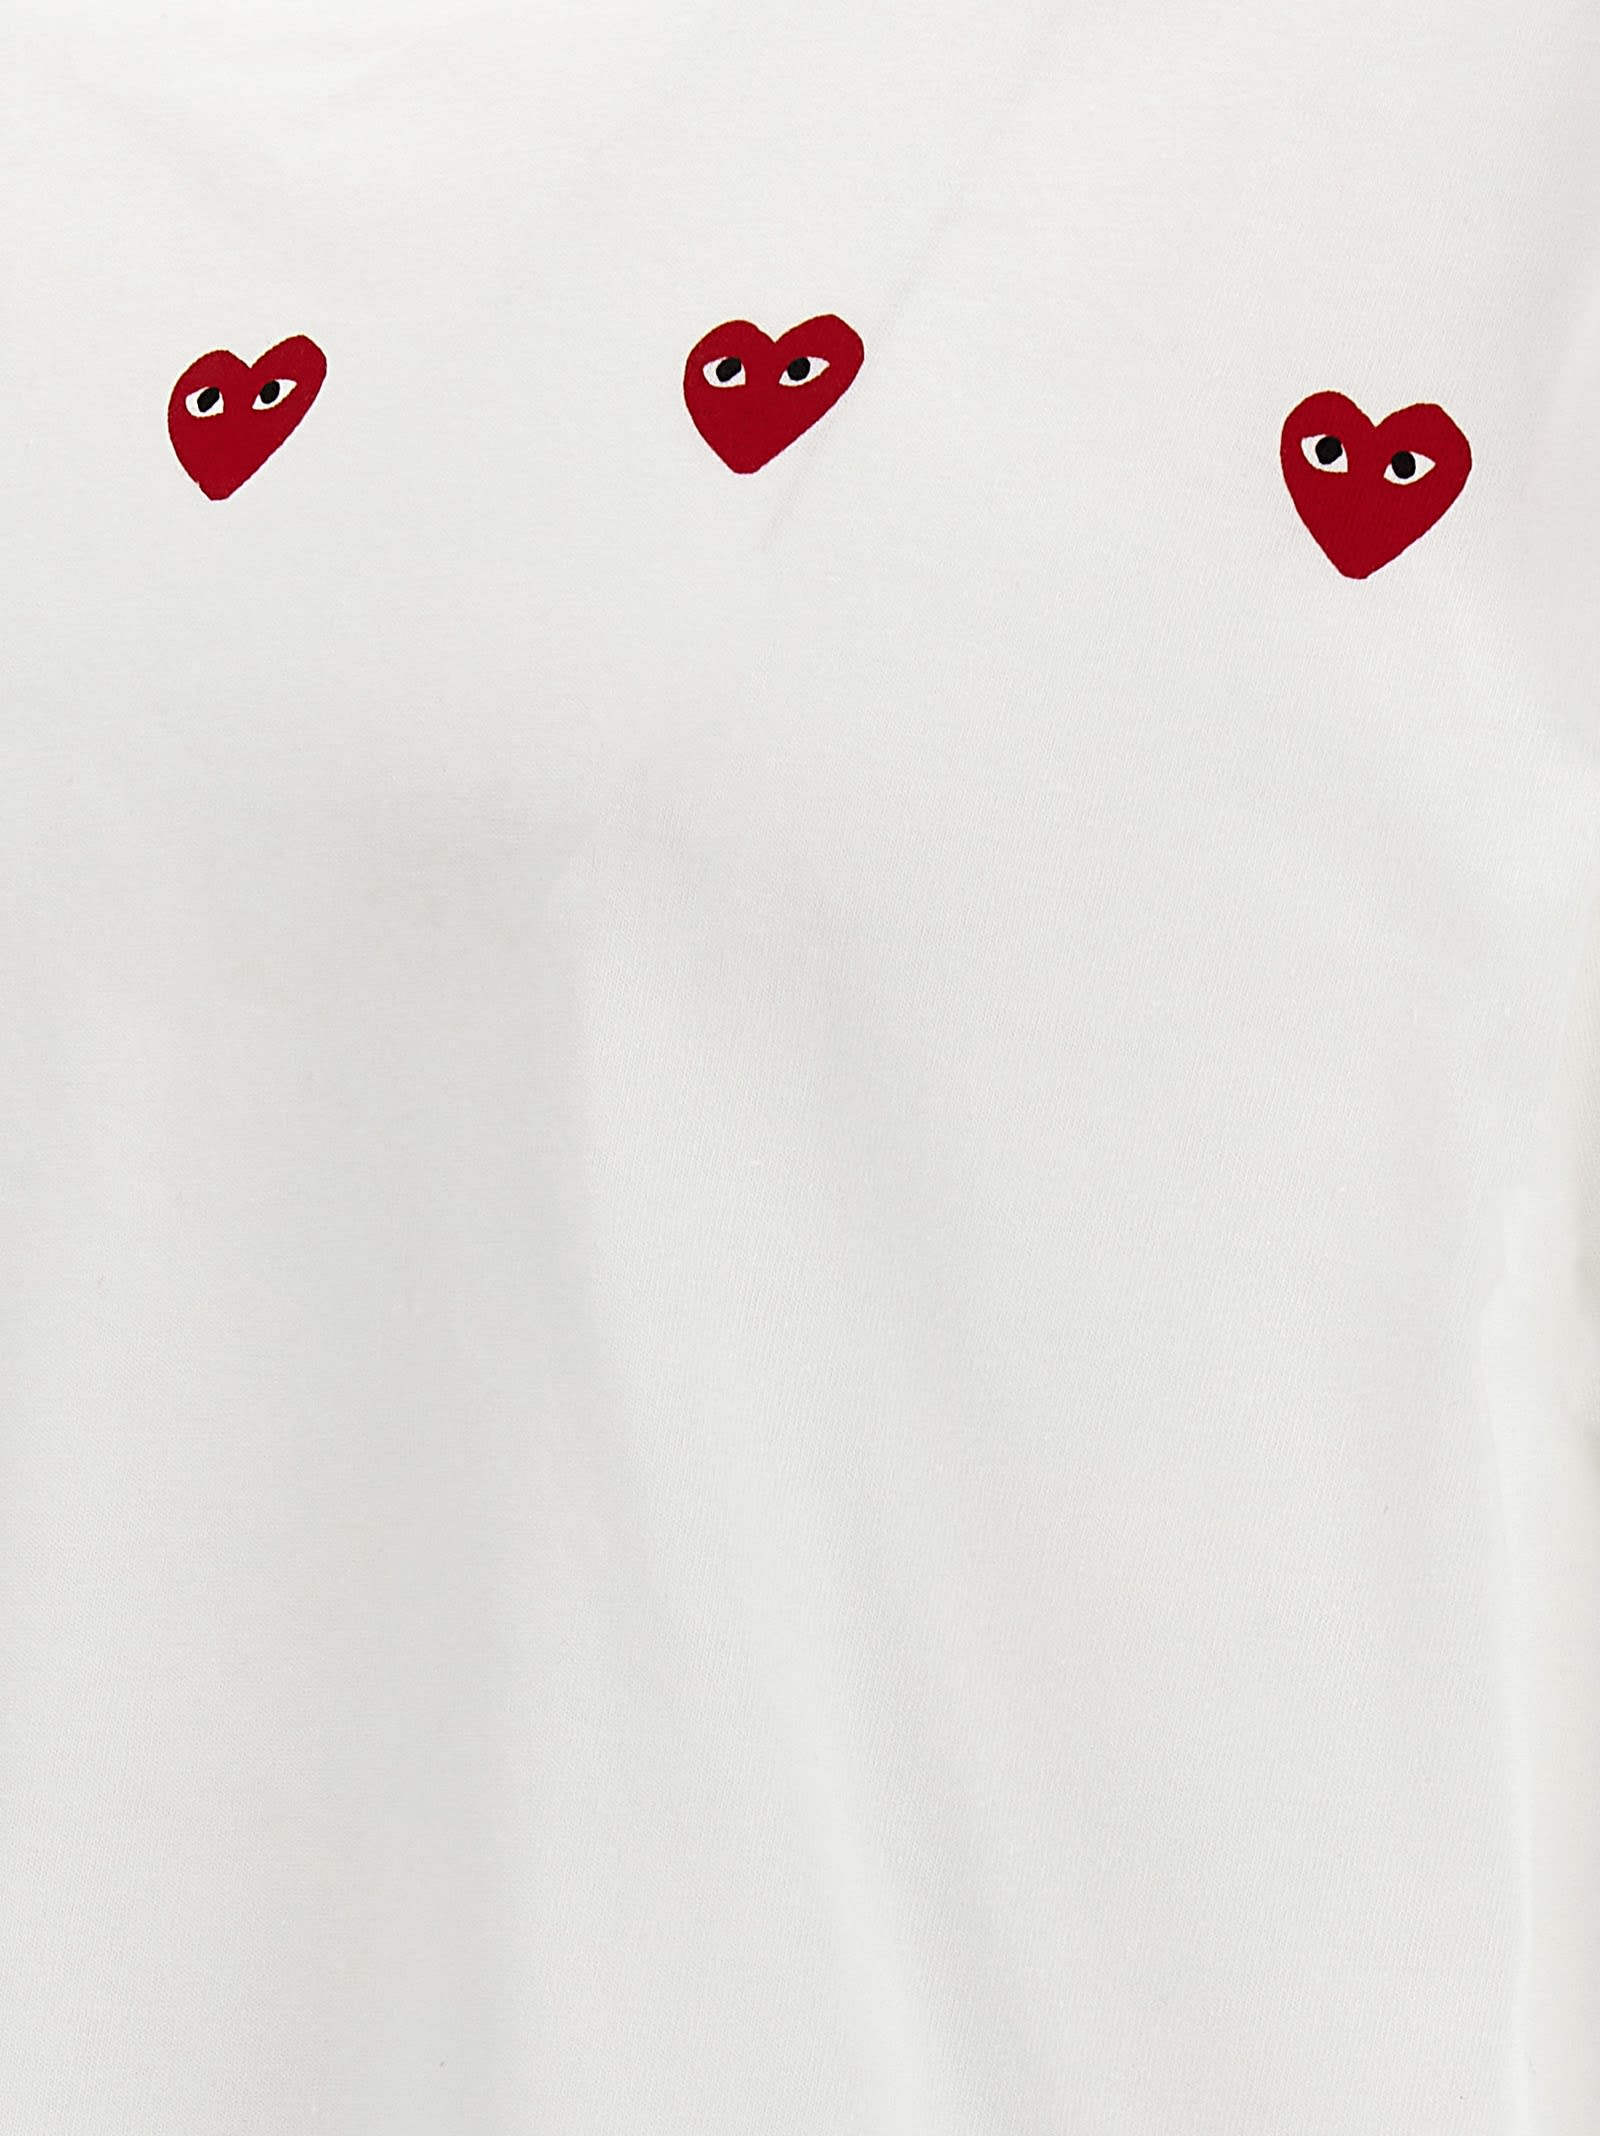 Shop Comme Des Garçons Play Multi Heart T-shirt In White